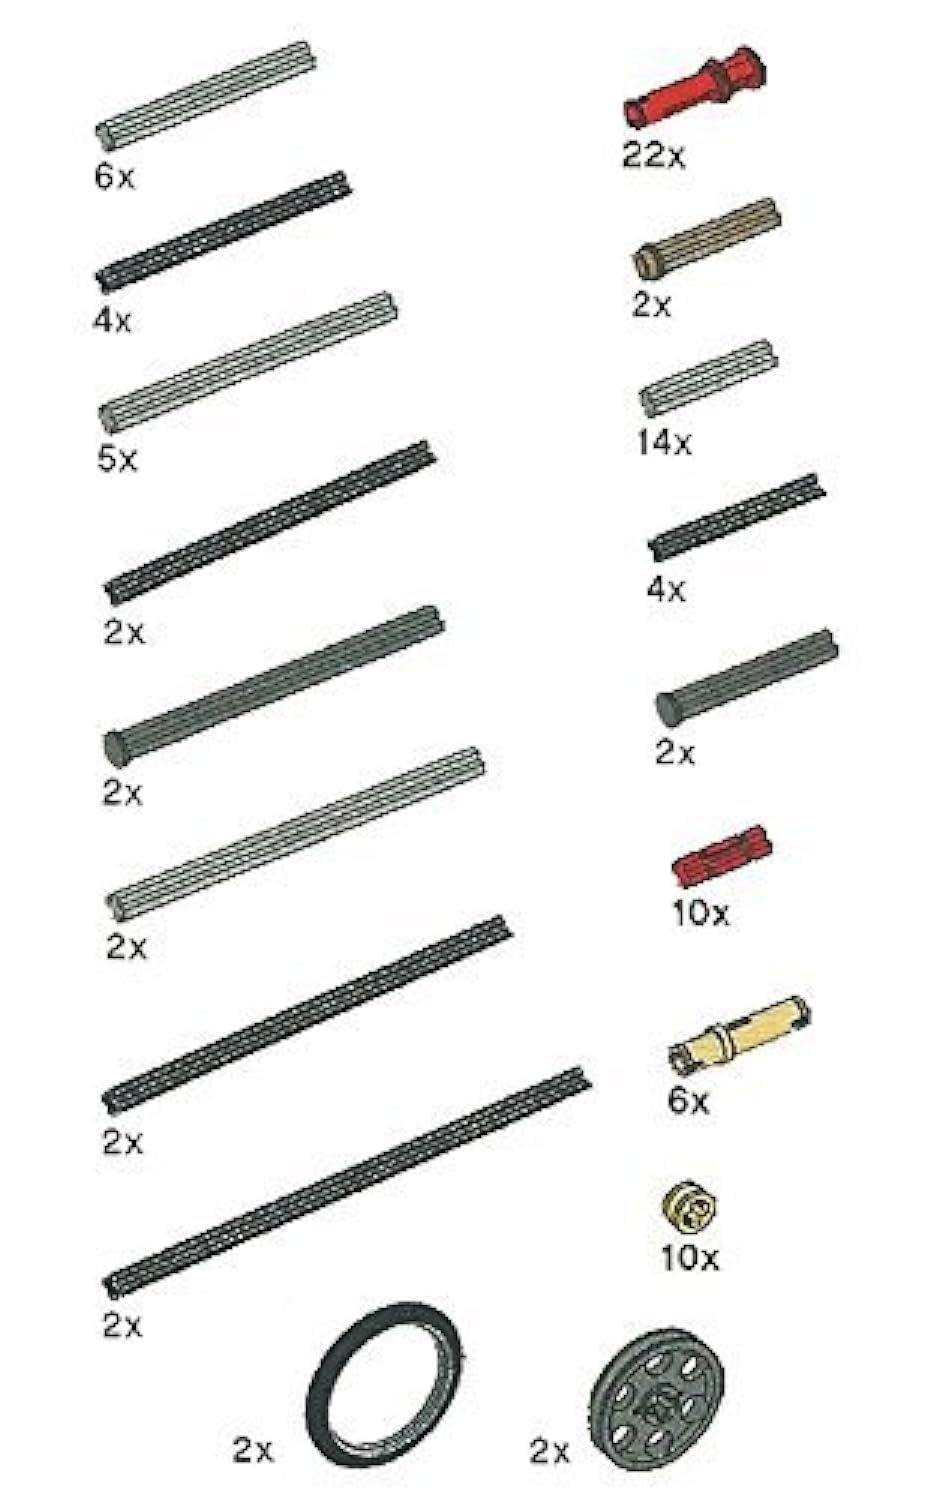 LEGO Technic Axle Rods Assortment Pack